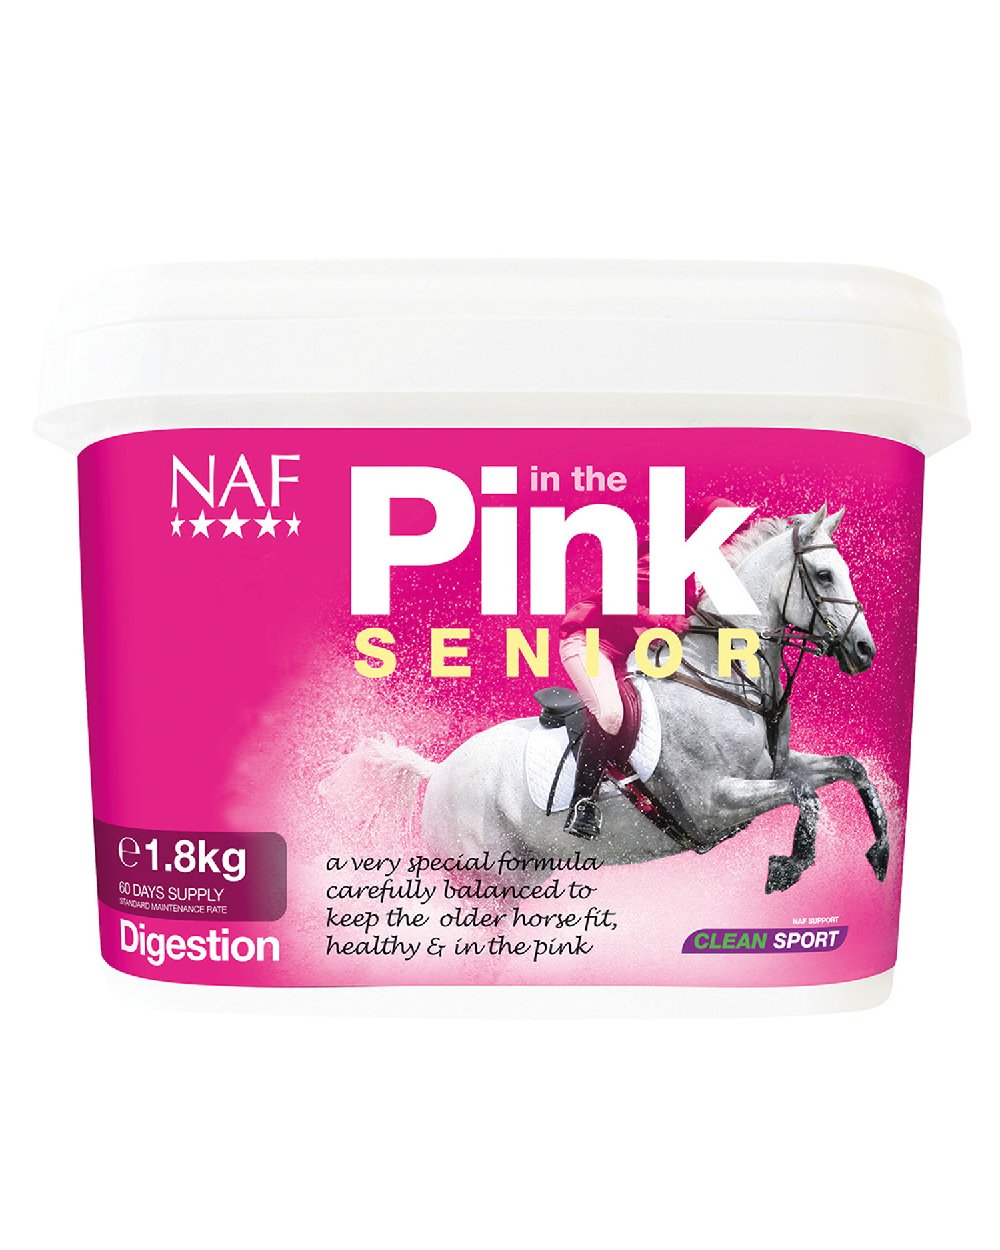 NAF In The Pink Senior 1.8kg on white background